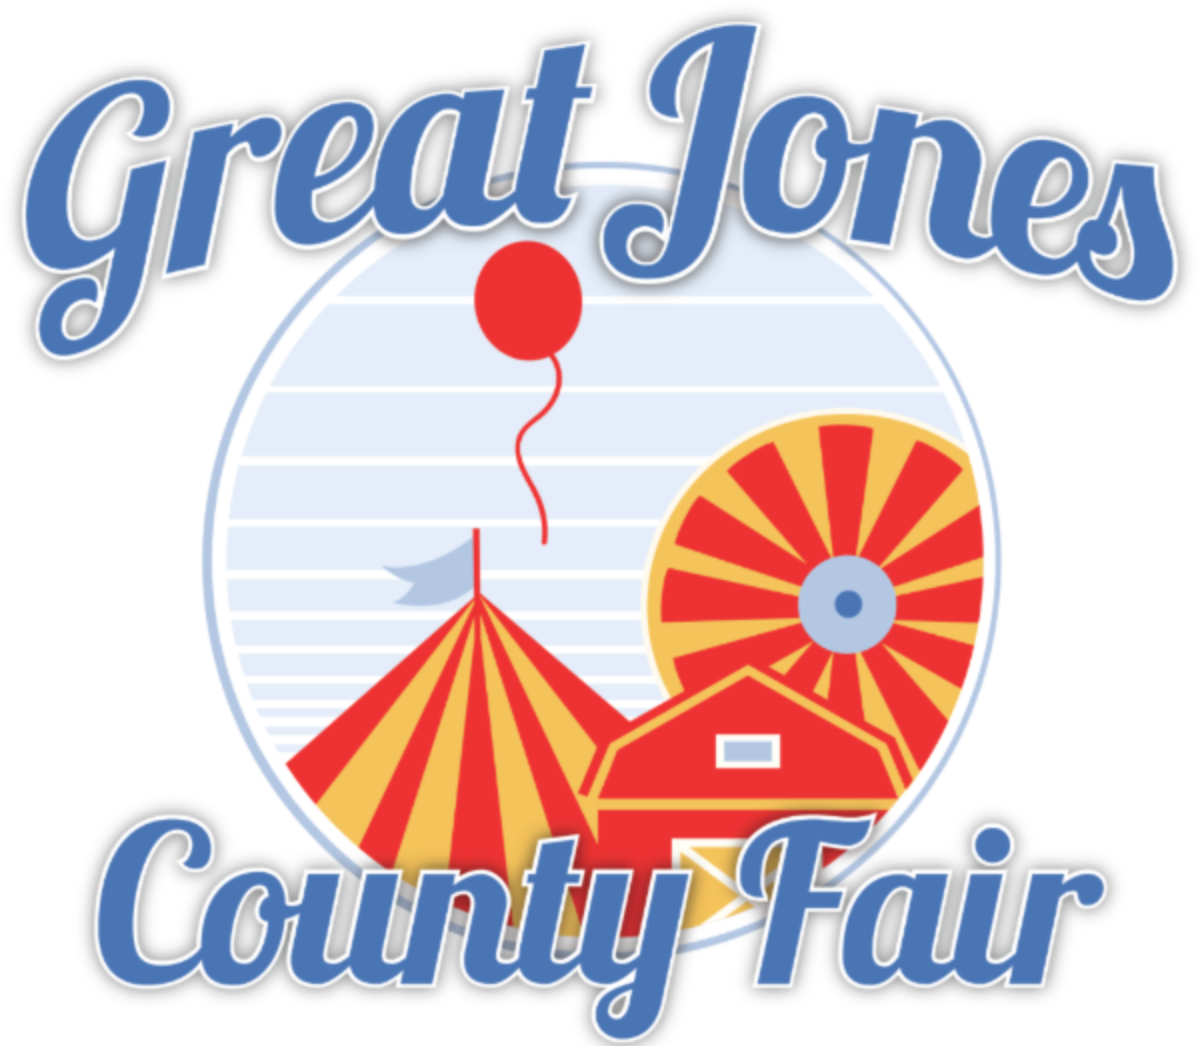 Great Jones County Fair Logo